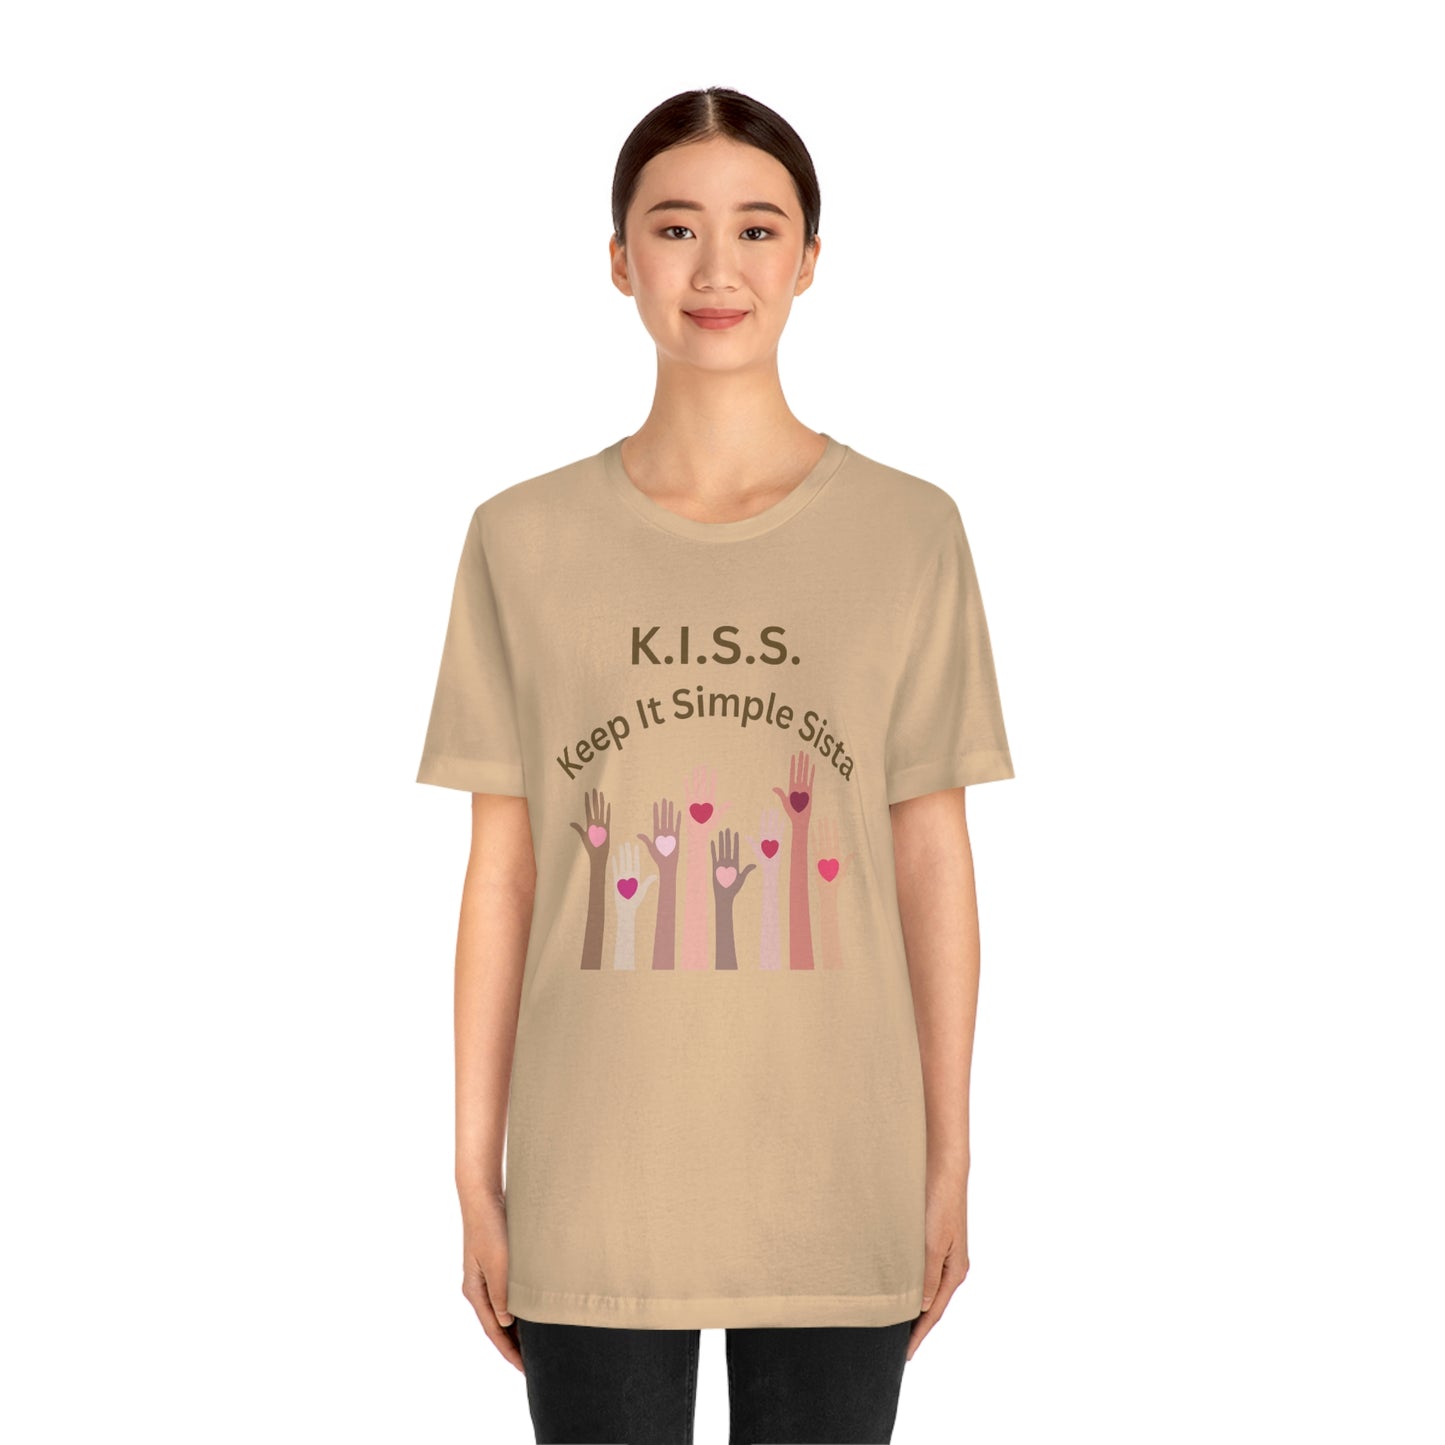 ‘K.I.S.S. Keep It Simple Sista’  Jersey Short Sleeve Tee